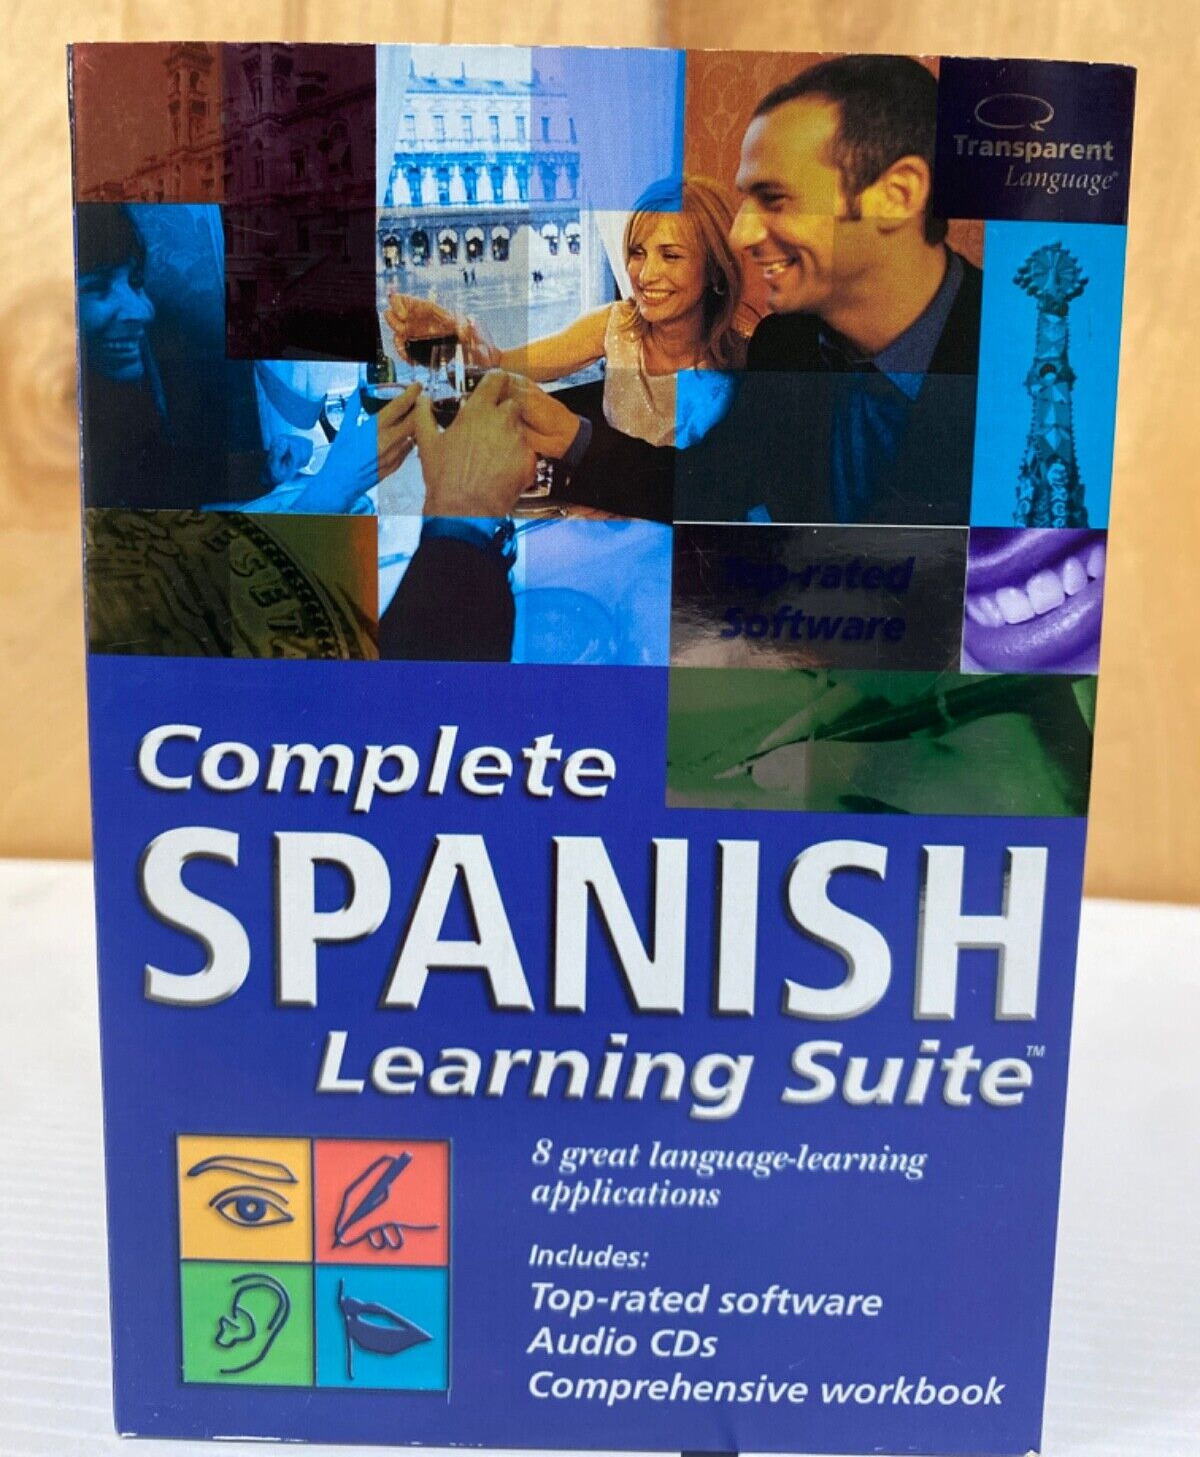 Transparent Language Complete Spanish Learning Suite (FC208-2Q2303